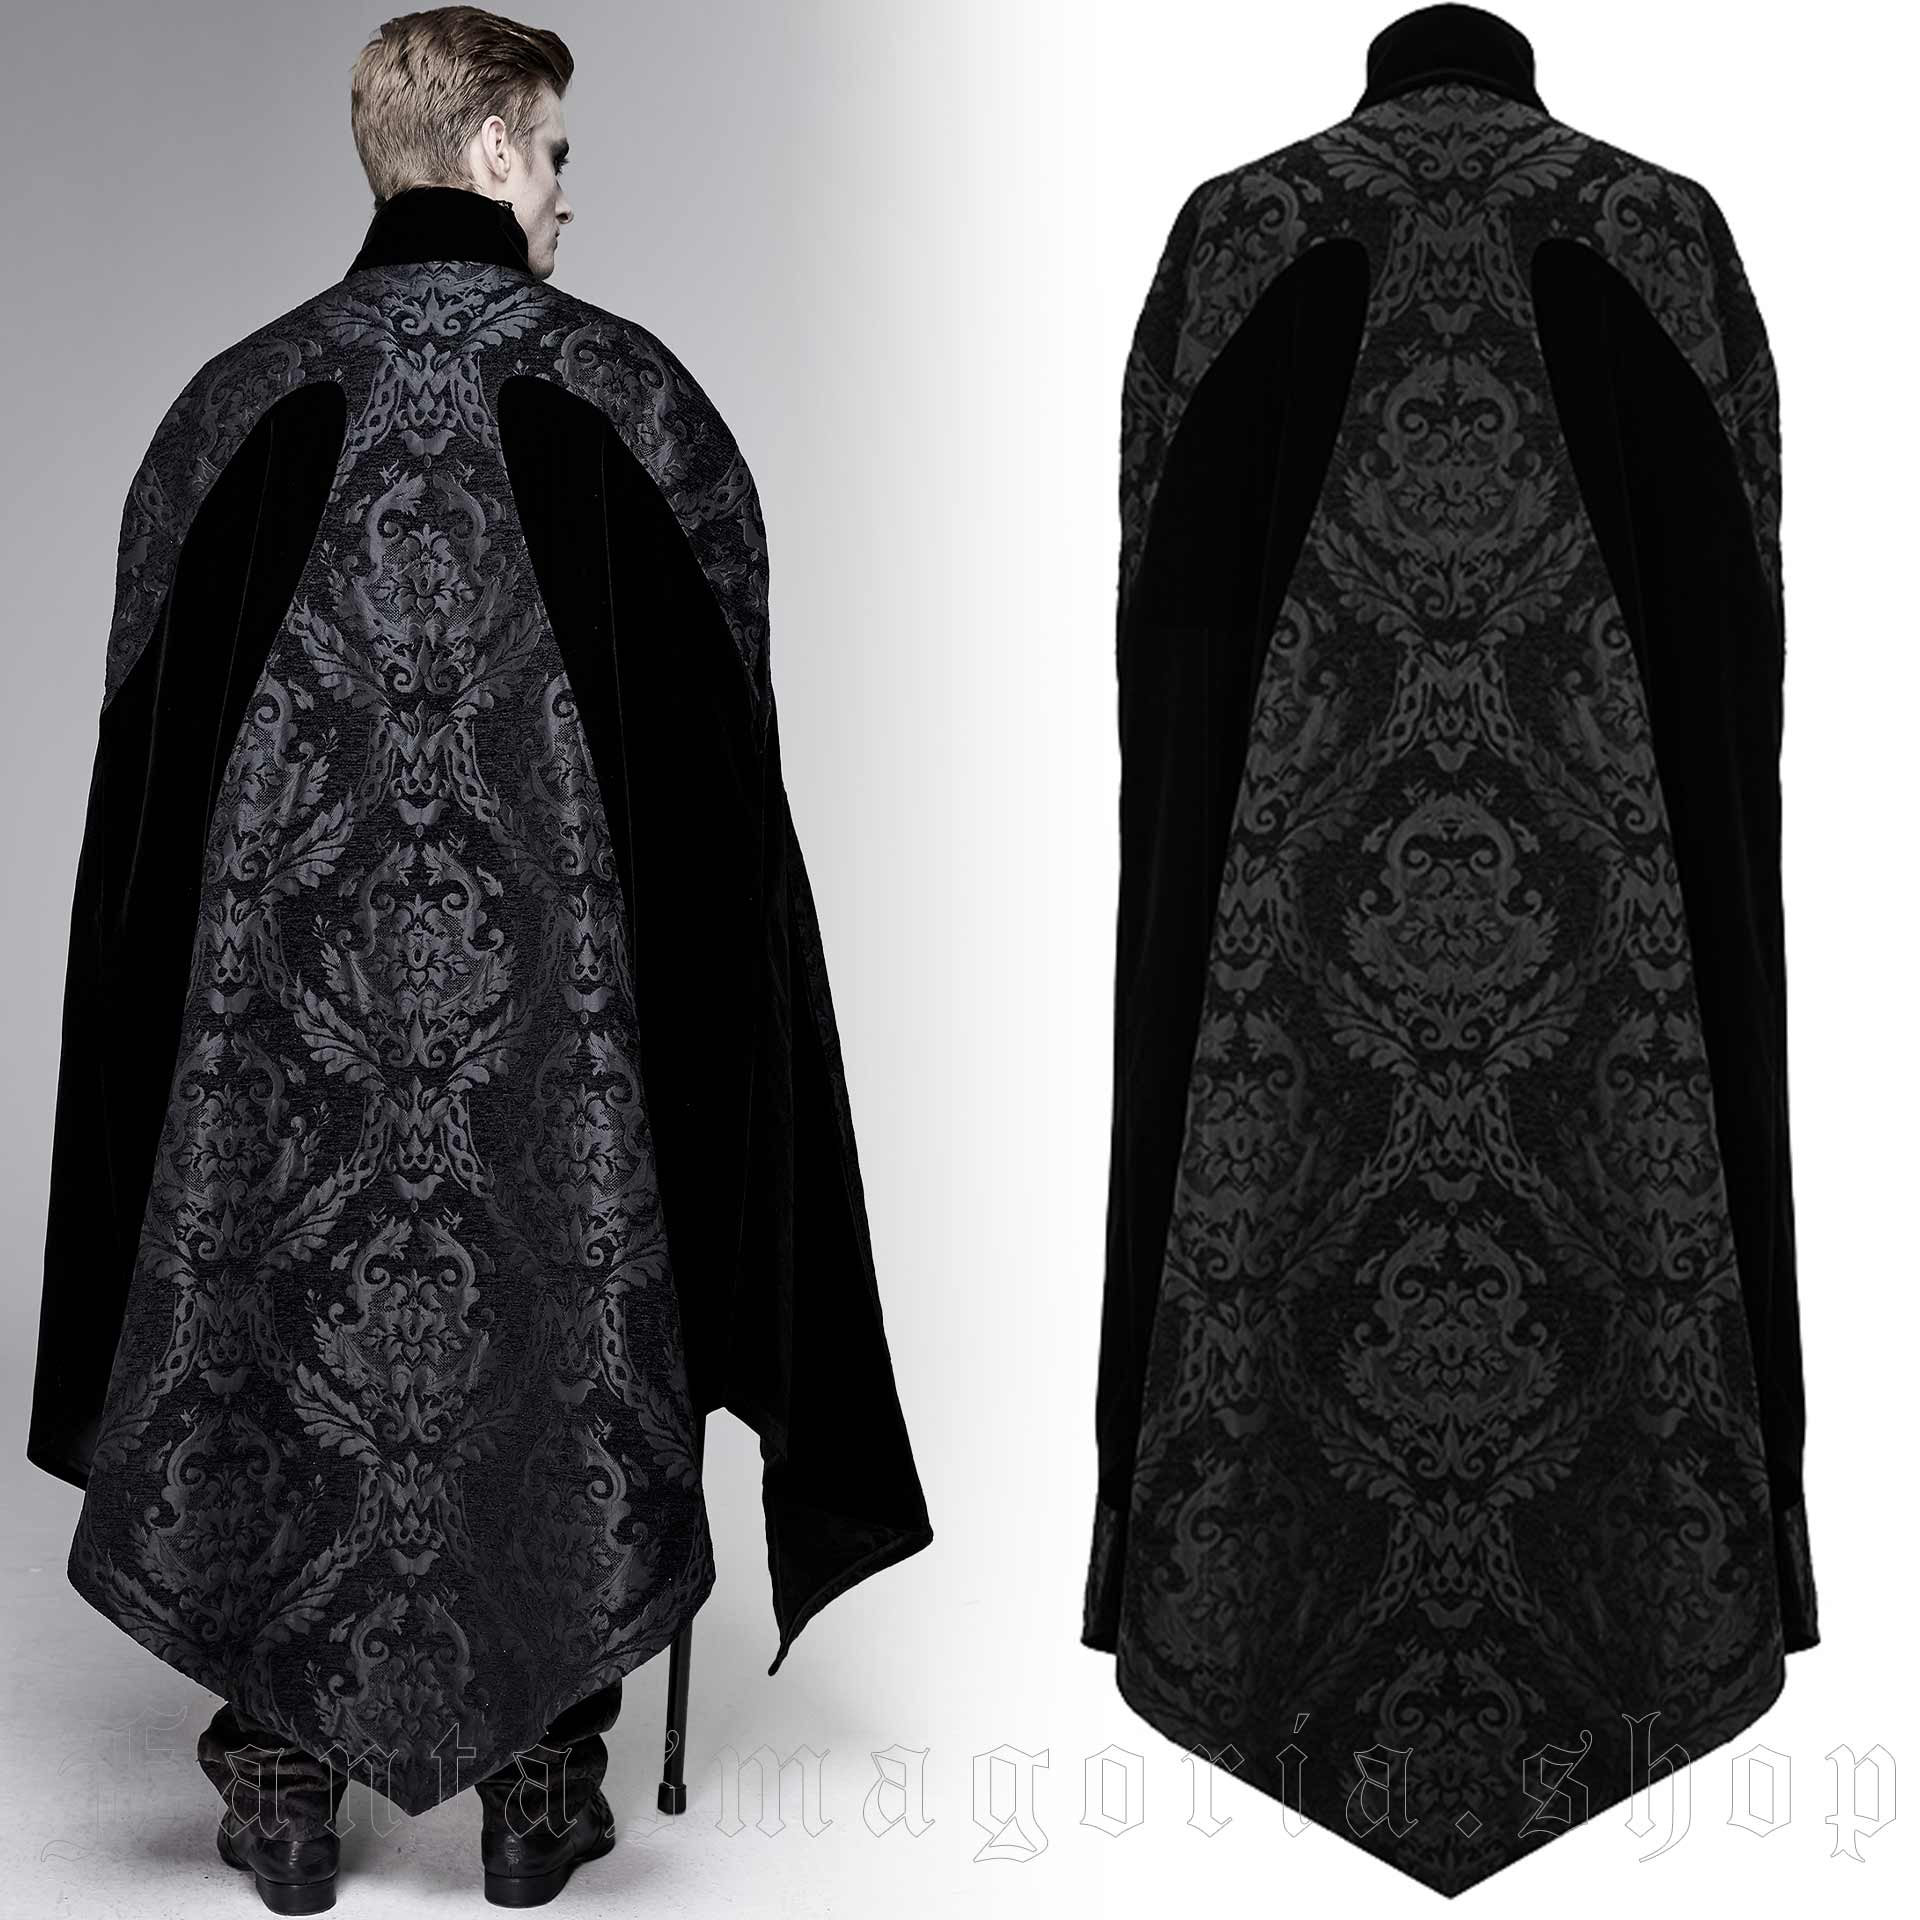 https://fantasmagoria.shop/81974/gothic-palace-black-brocade-cloak.jpg